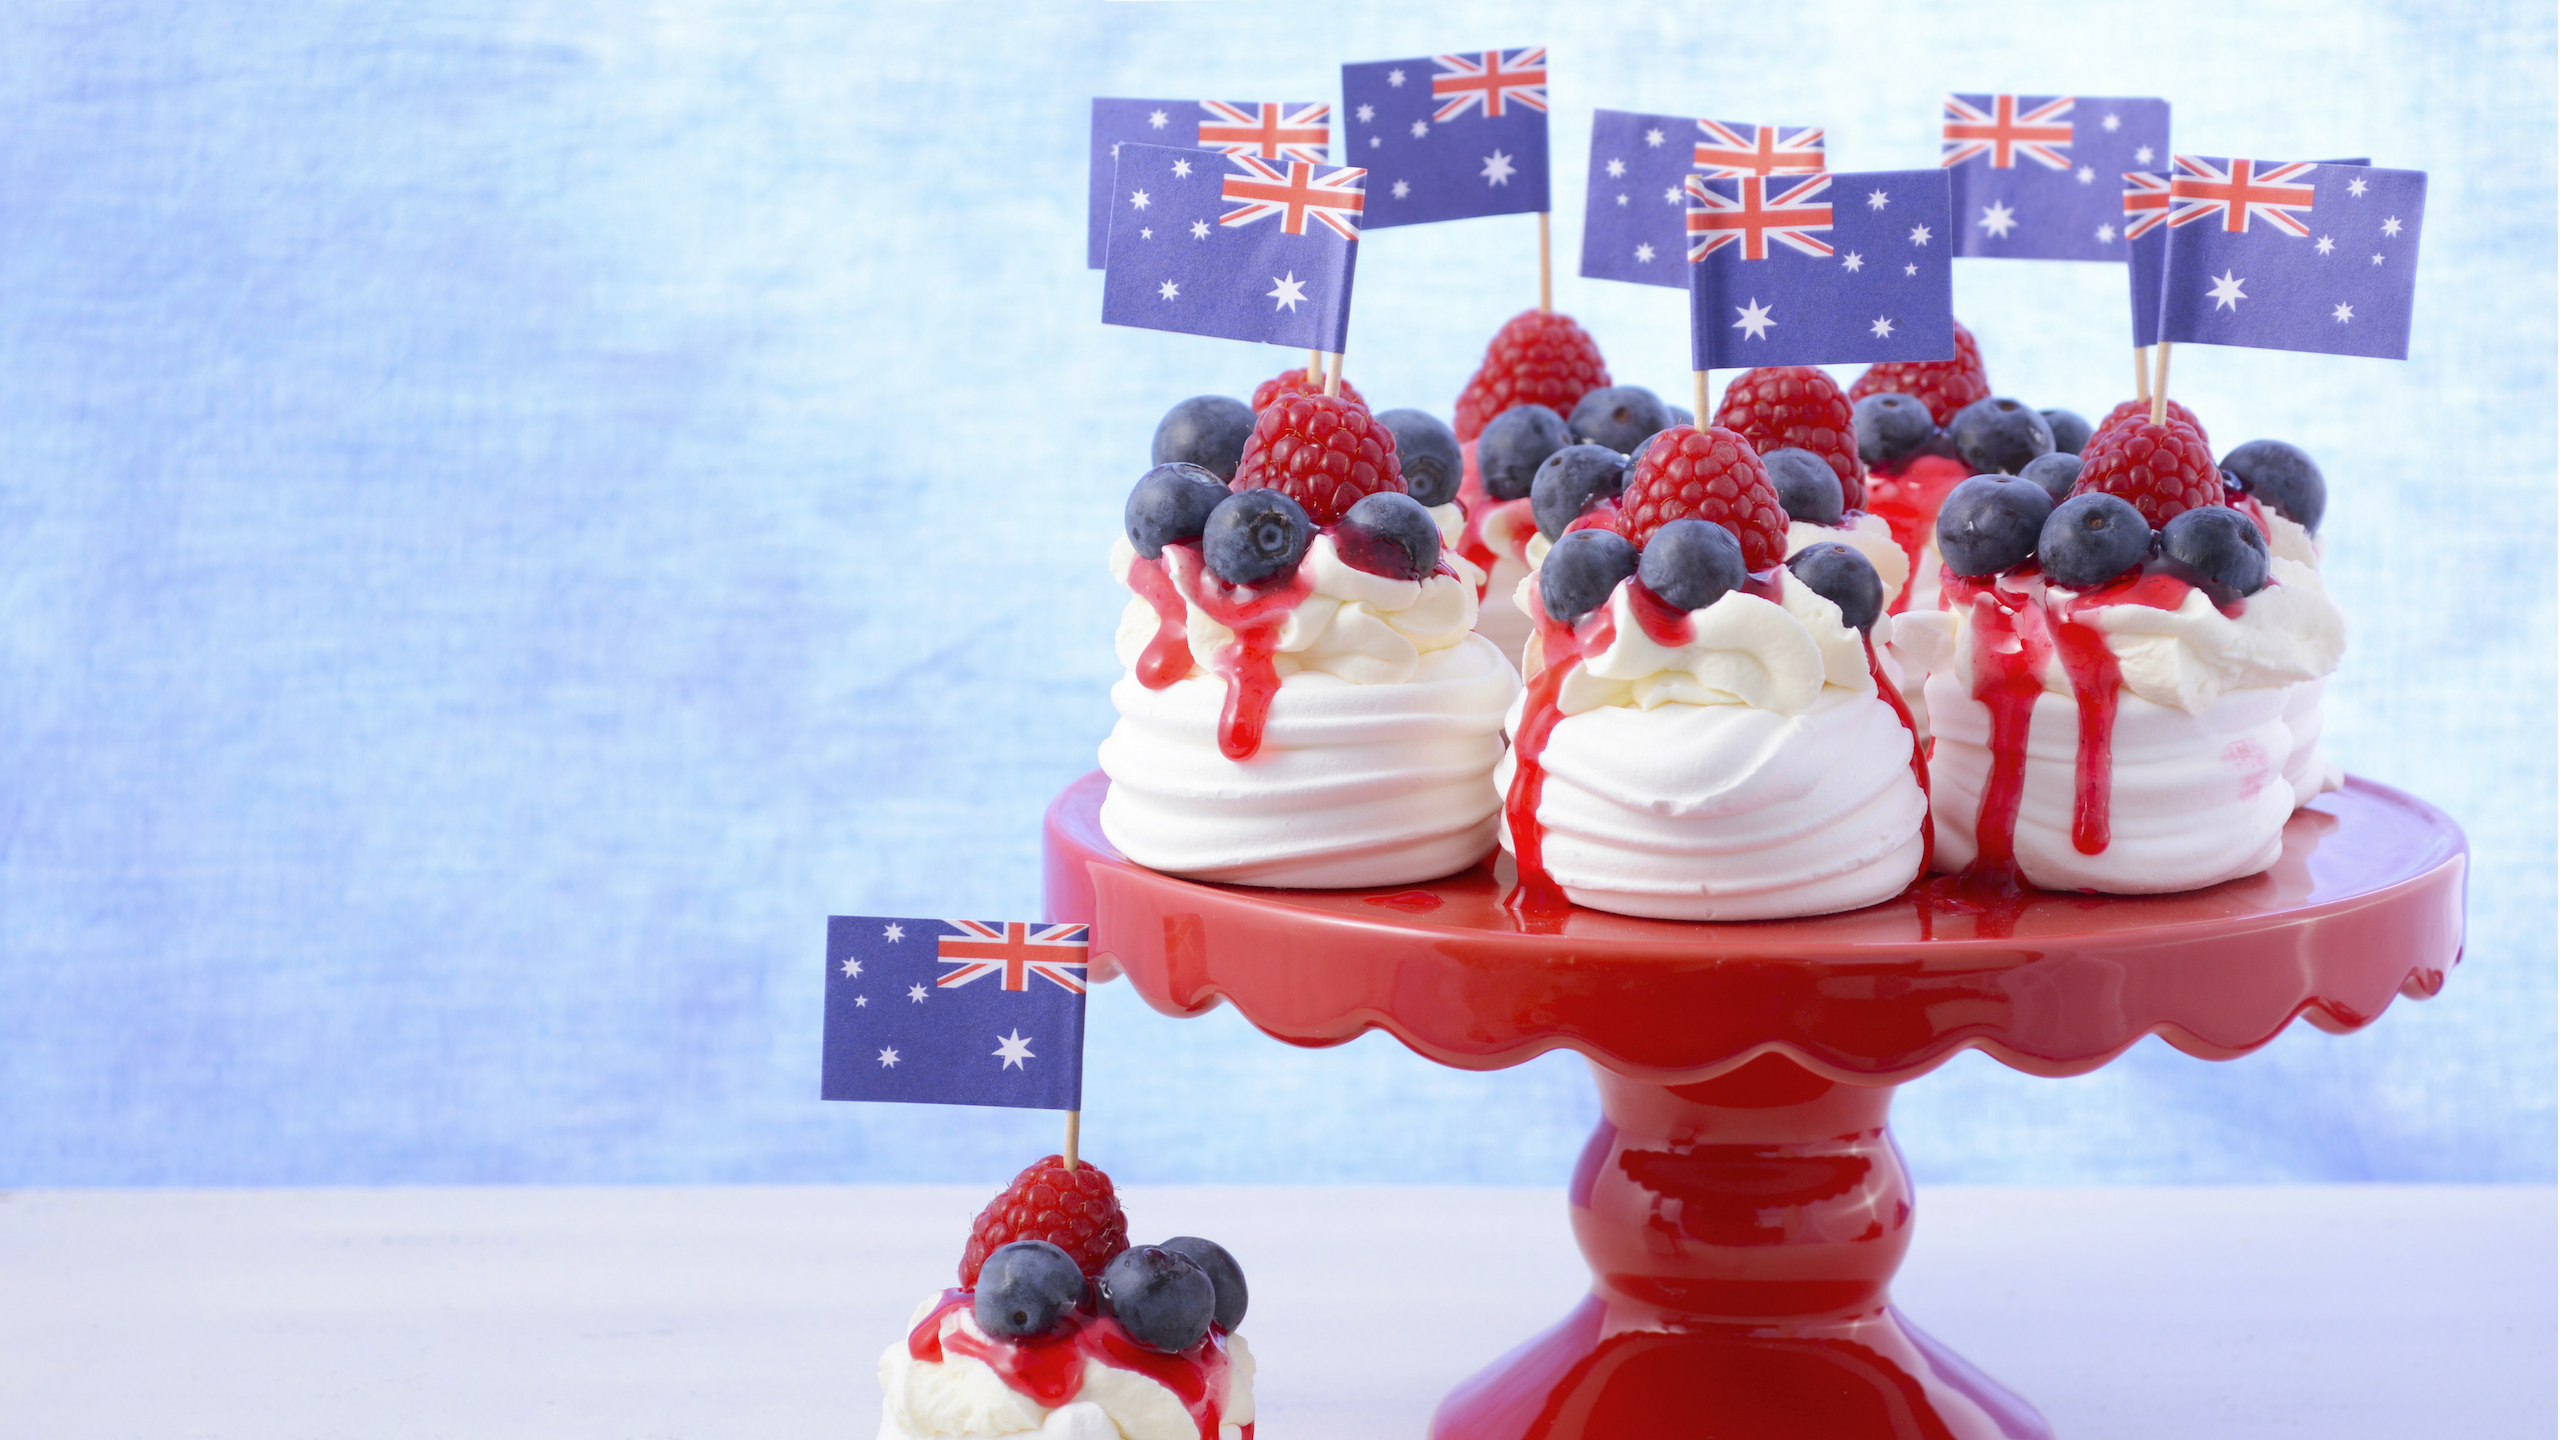 Magnolia Verandah: This cake took the cake on Australia Day!